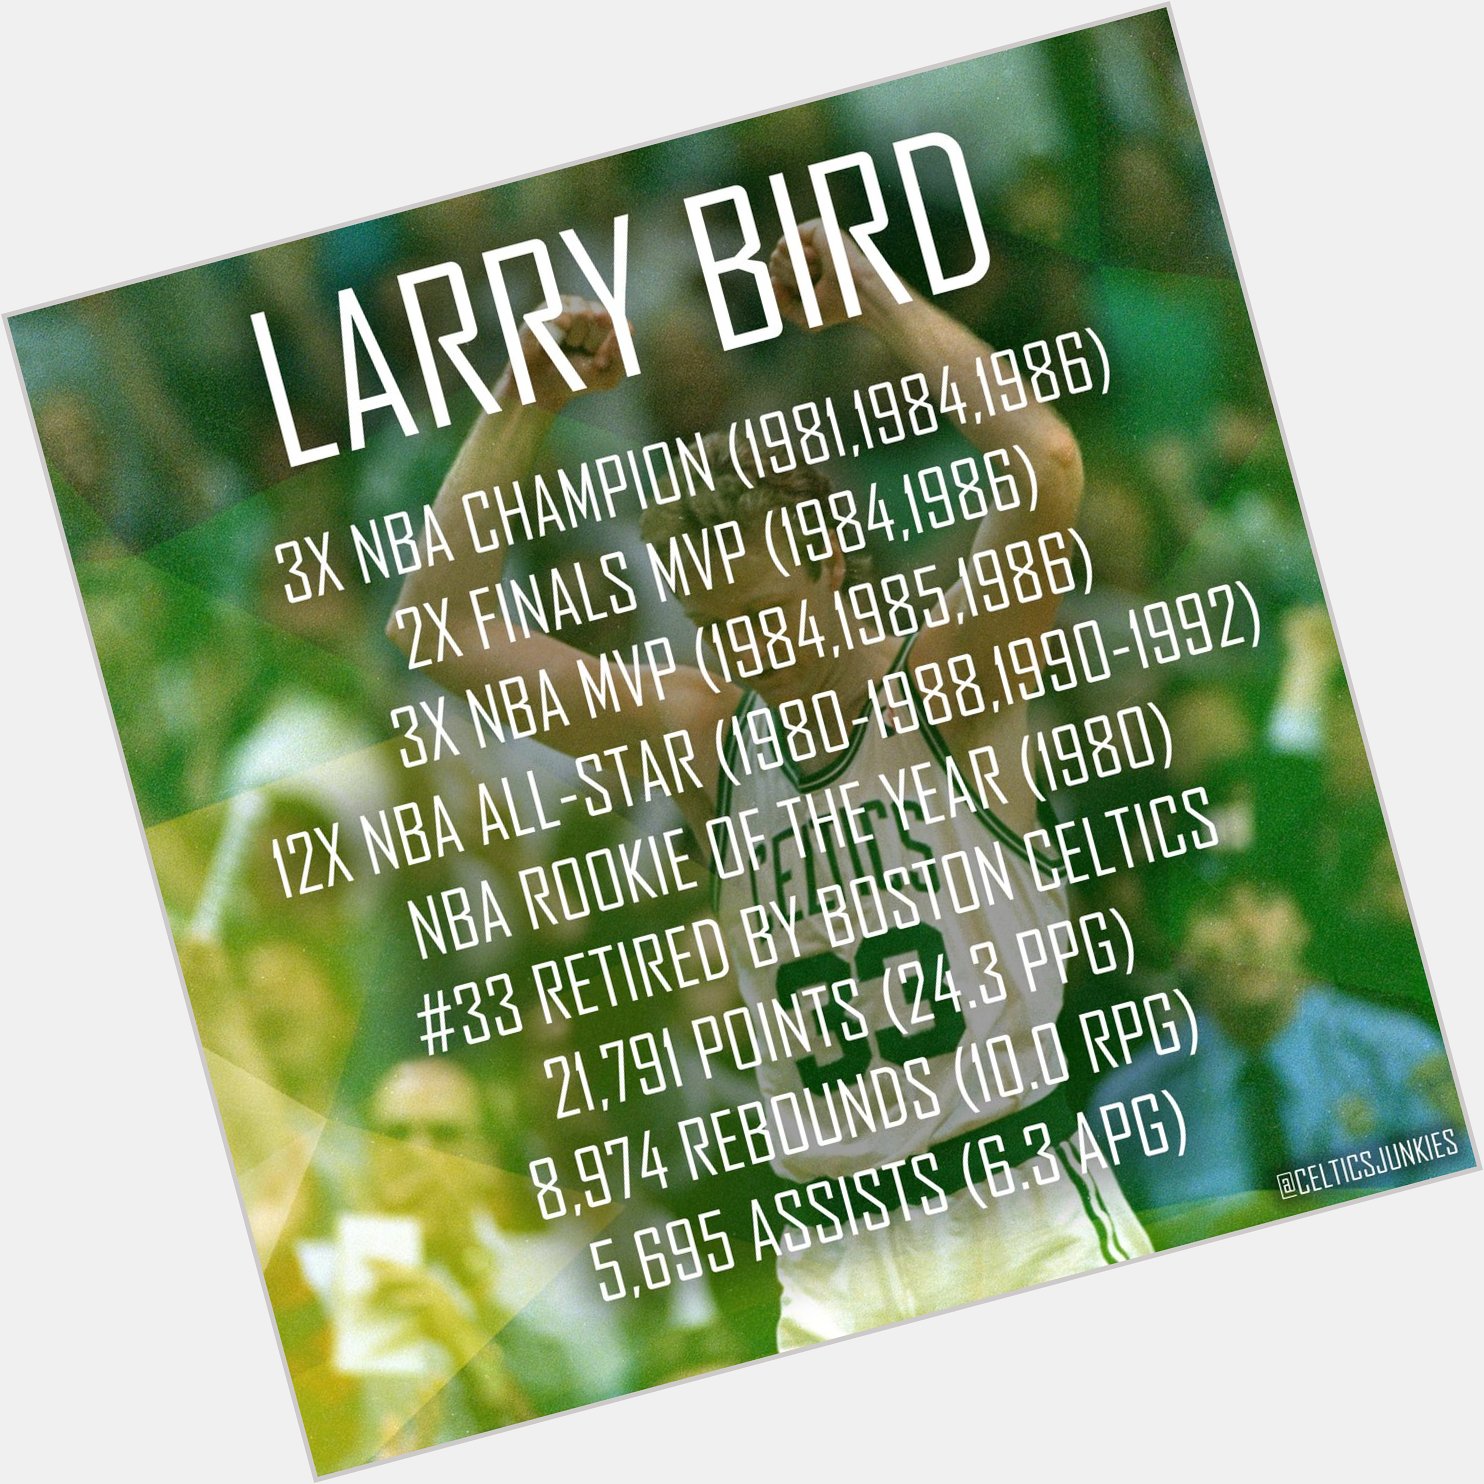 Happy 62nd Birthday Larry Bird! 